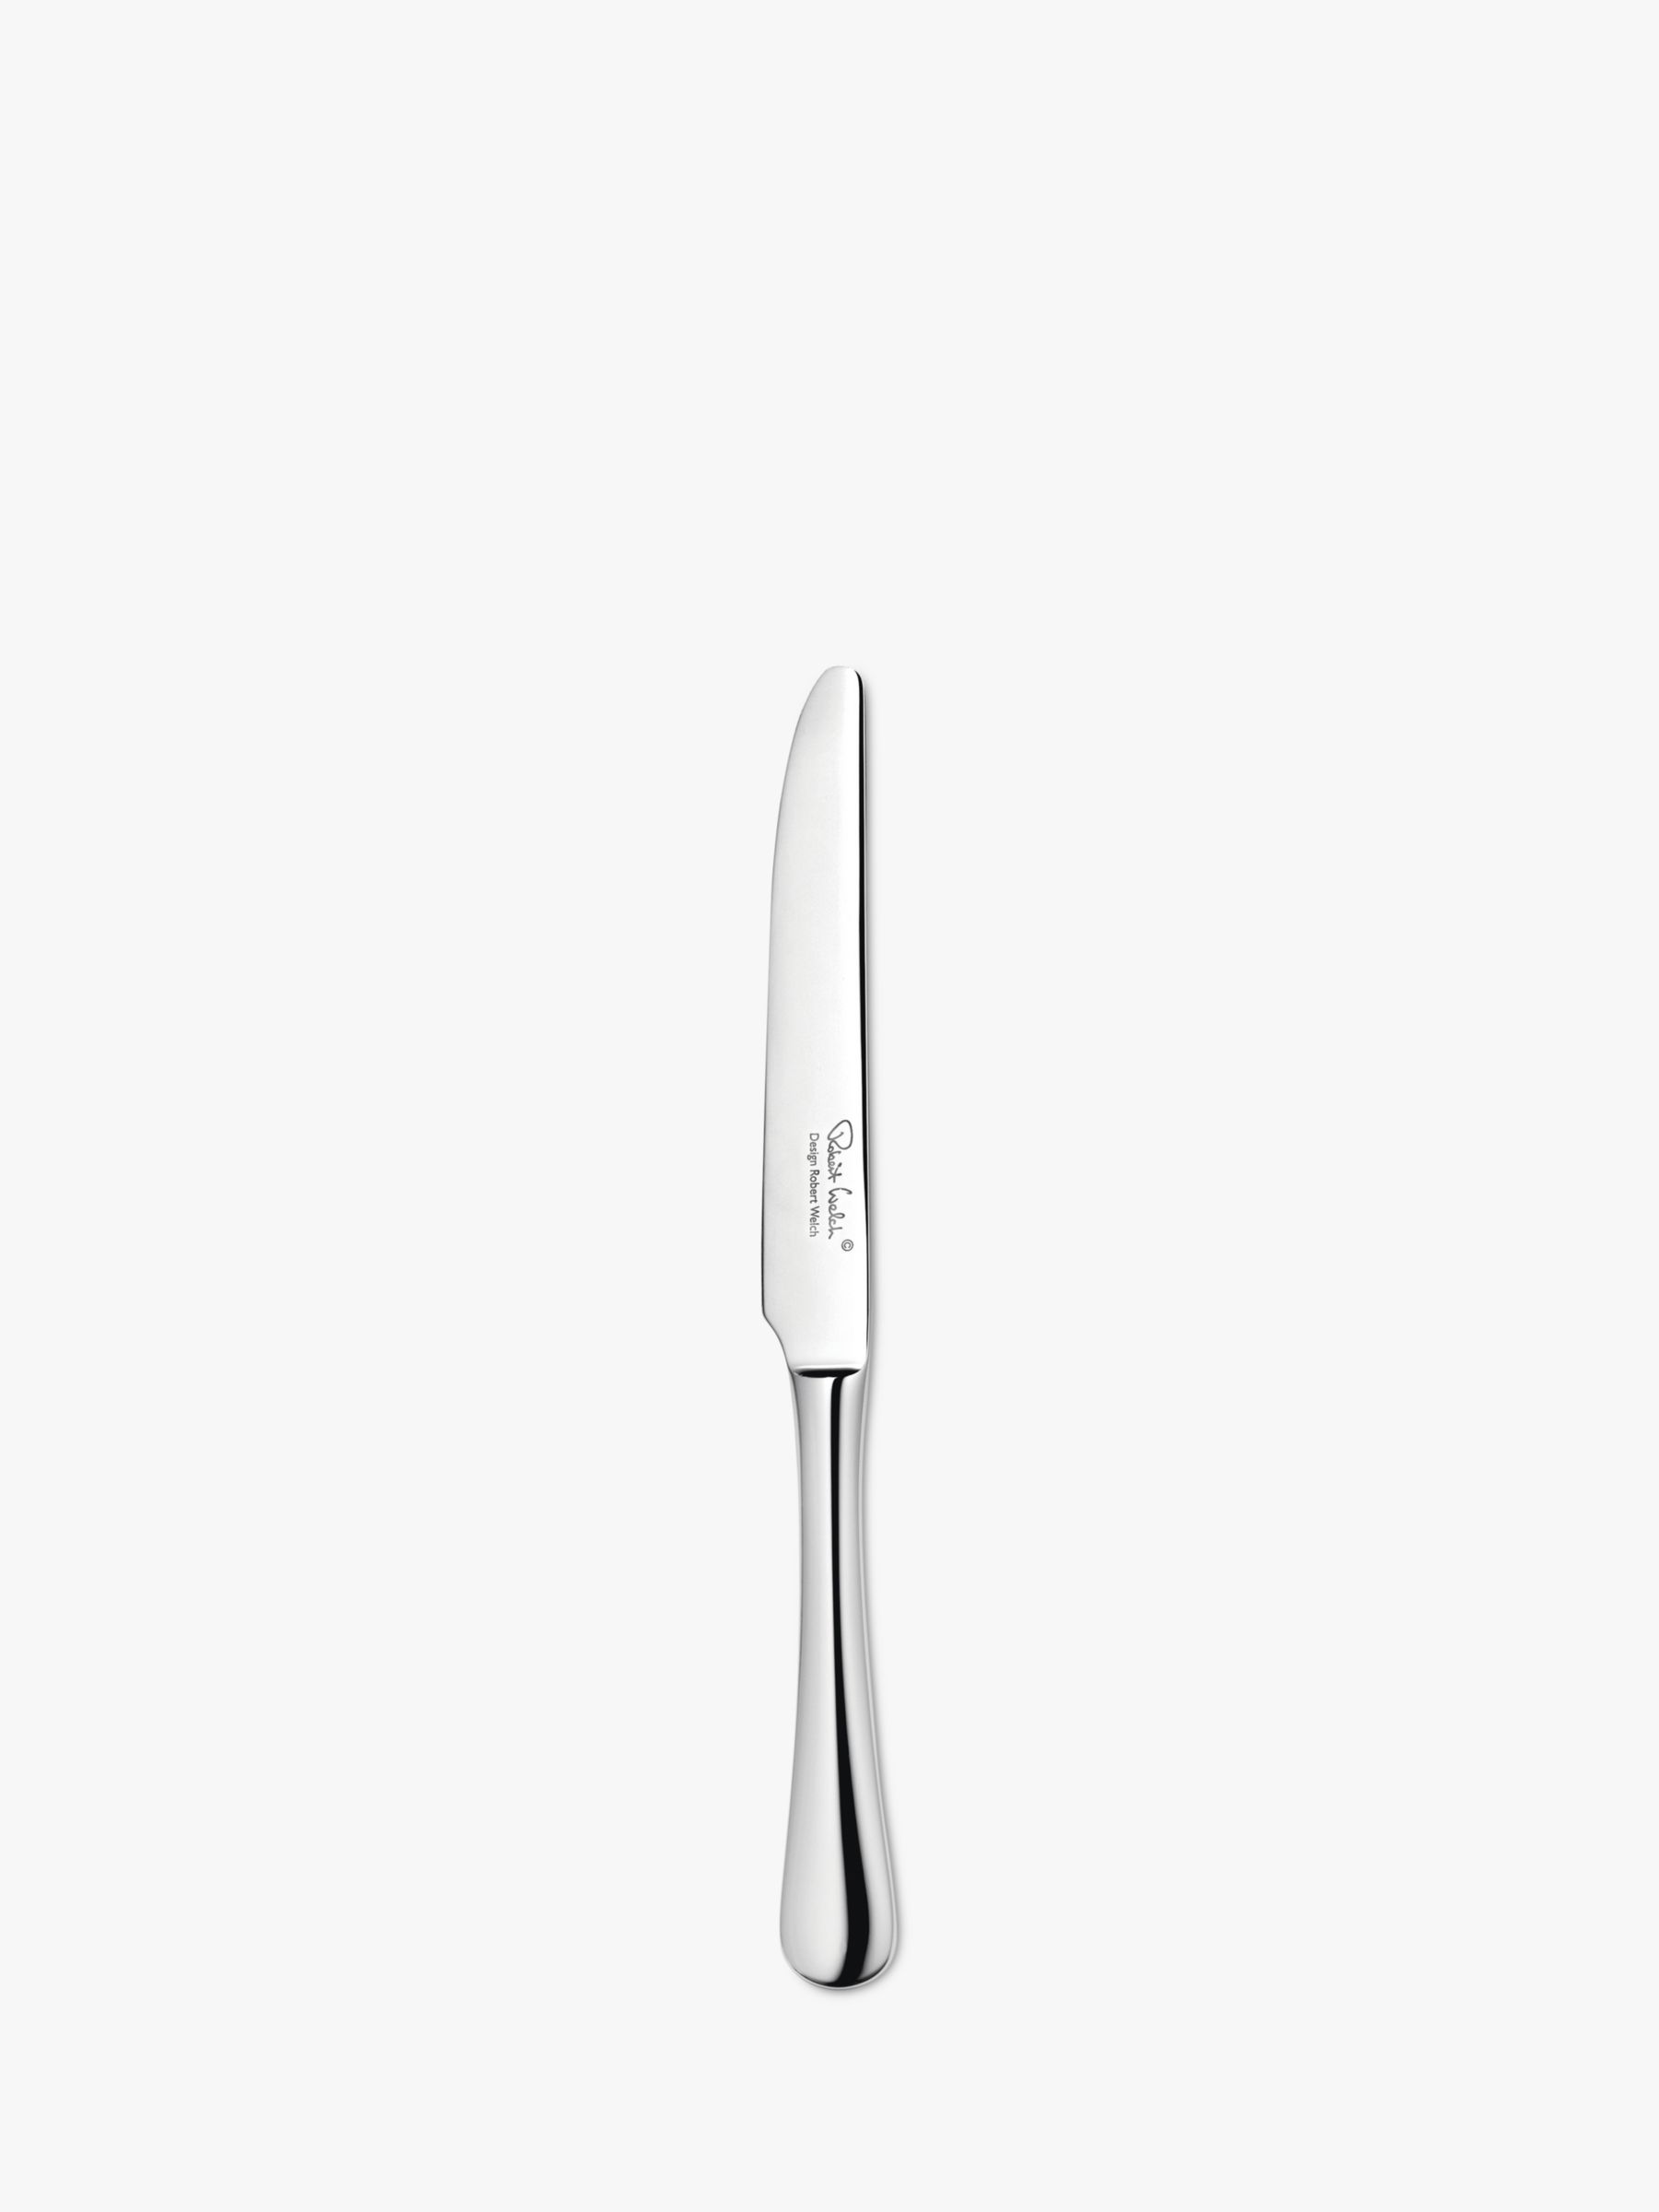 Robert Welch Radford Dessert Knife, Stainless